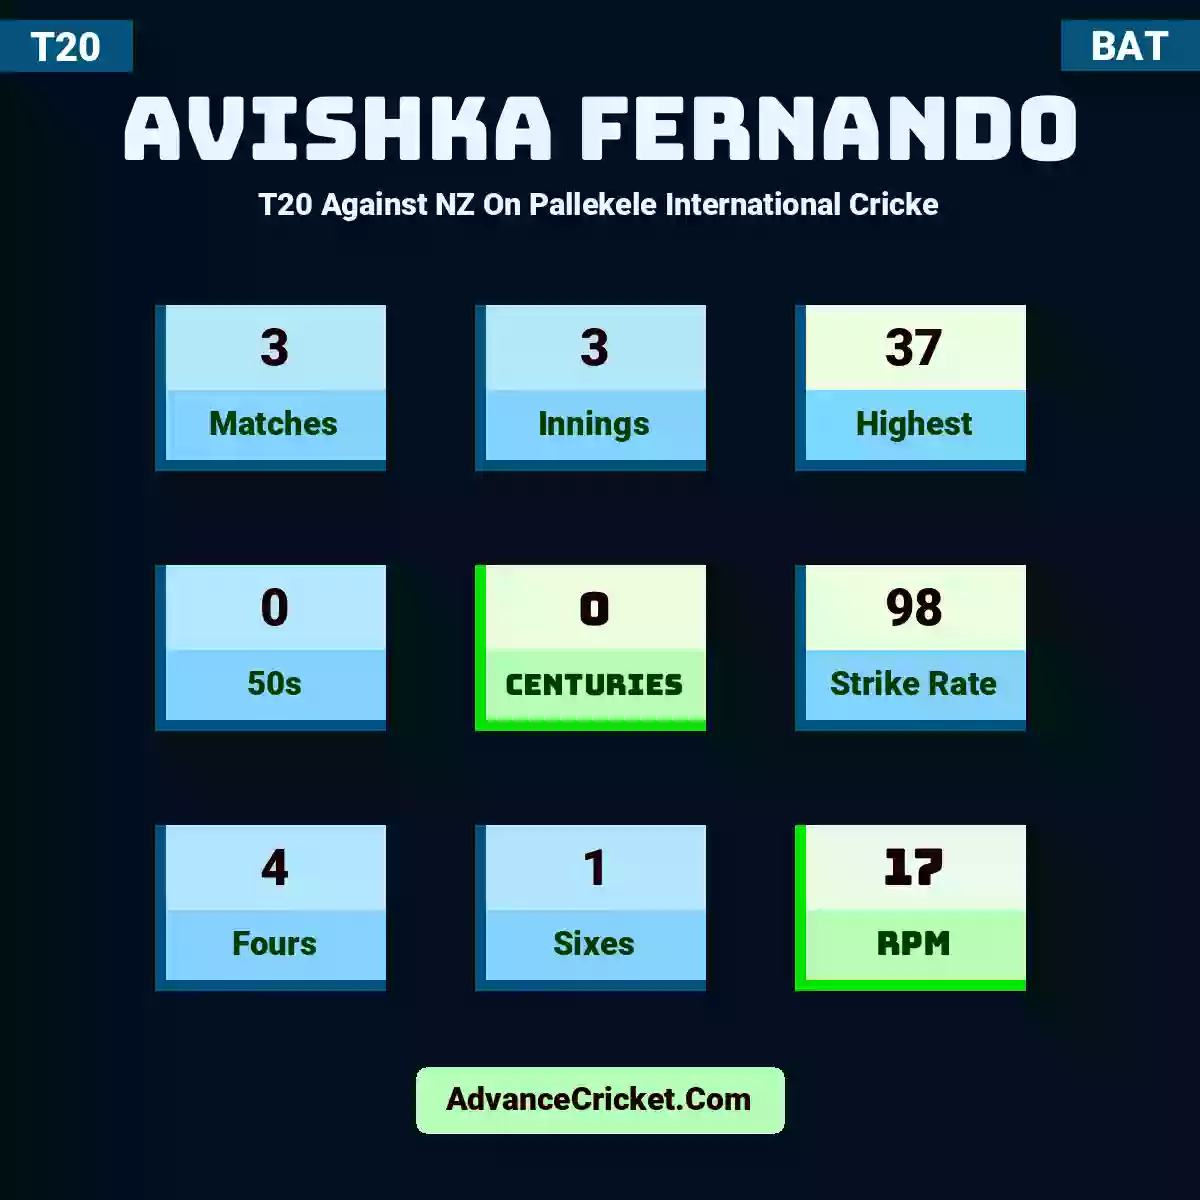 Avishka Fernando T20  Against NZ On Pallekele International Cricke, Avishka Fernando played 3 matches, scored 37 runs as highest, 0 half-centuries, and 0 centuries, with a strike rate of 98. A.Fernando hit 4 fours and 1 sixes, with an RPM of 17.